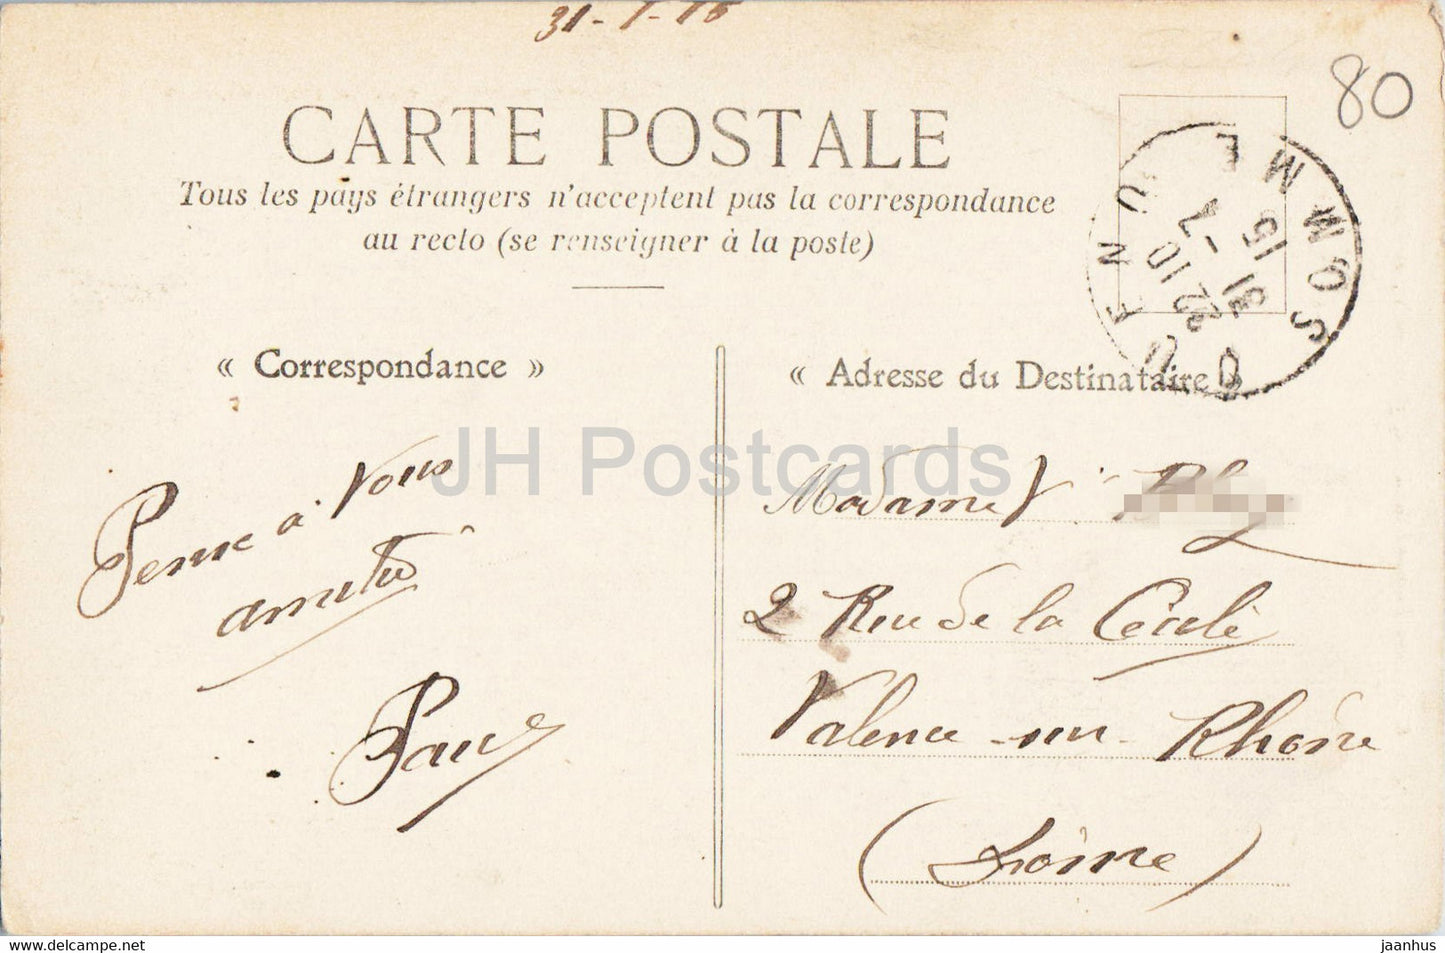 Calvaire entre Quend et Fort Mahon - old postcard - 1915 - France - used